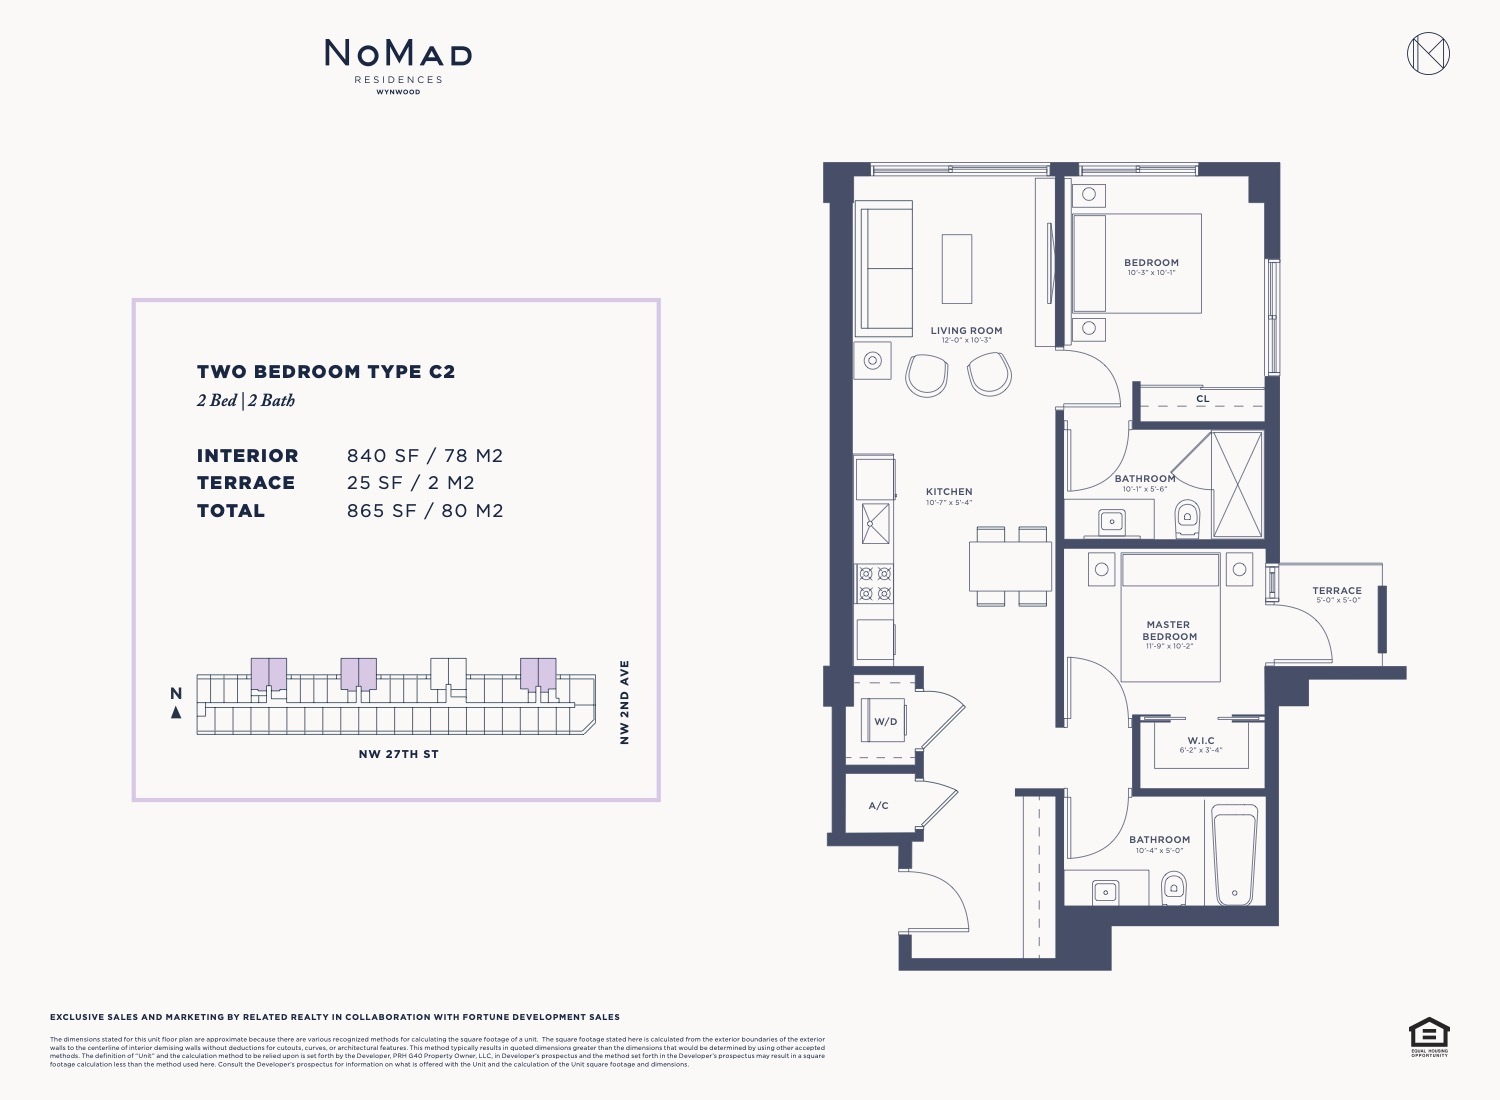 Floor Plan for Nomad Wynwood Floorplans, Two Bedroom Type C2